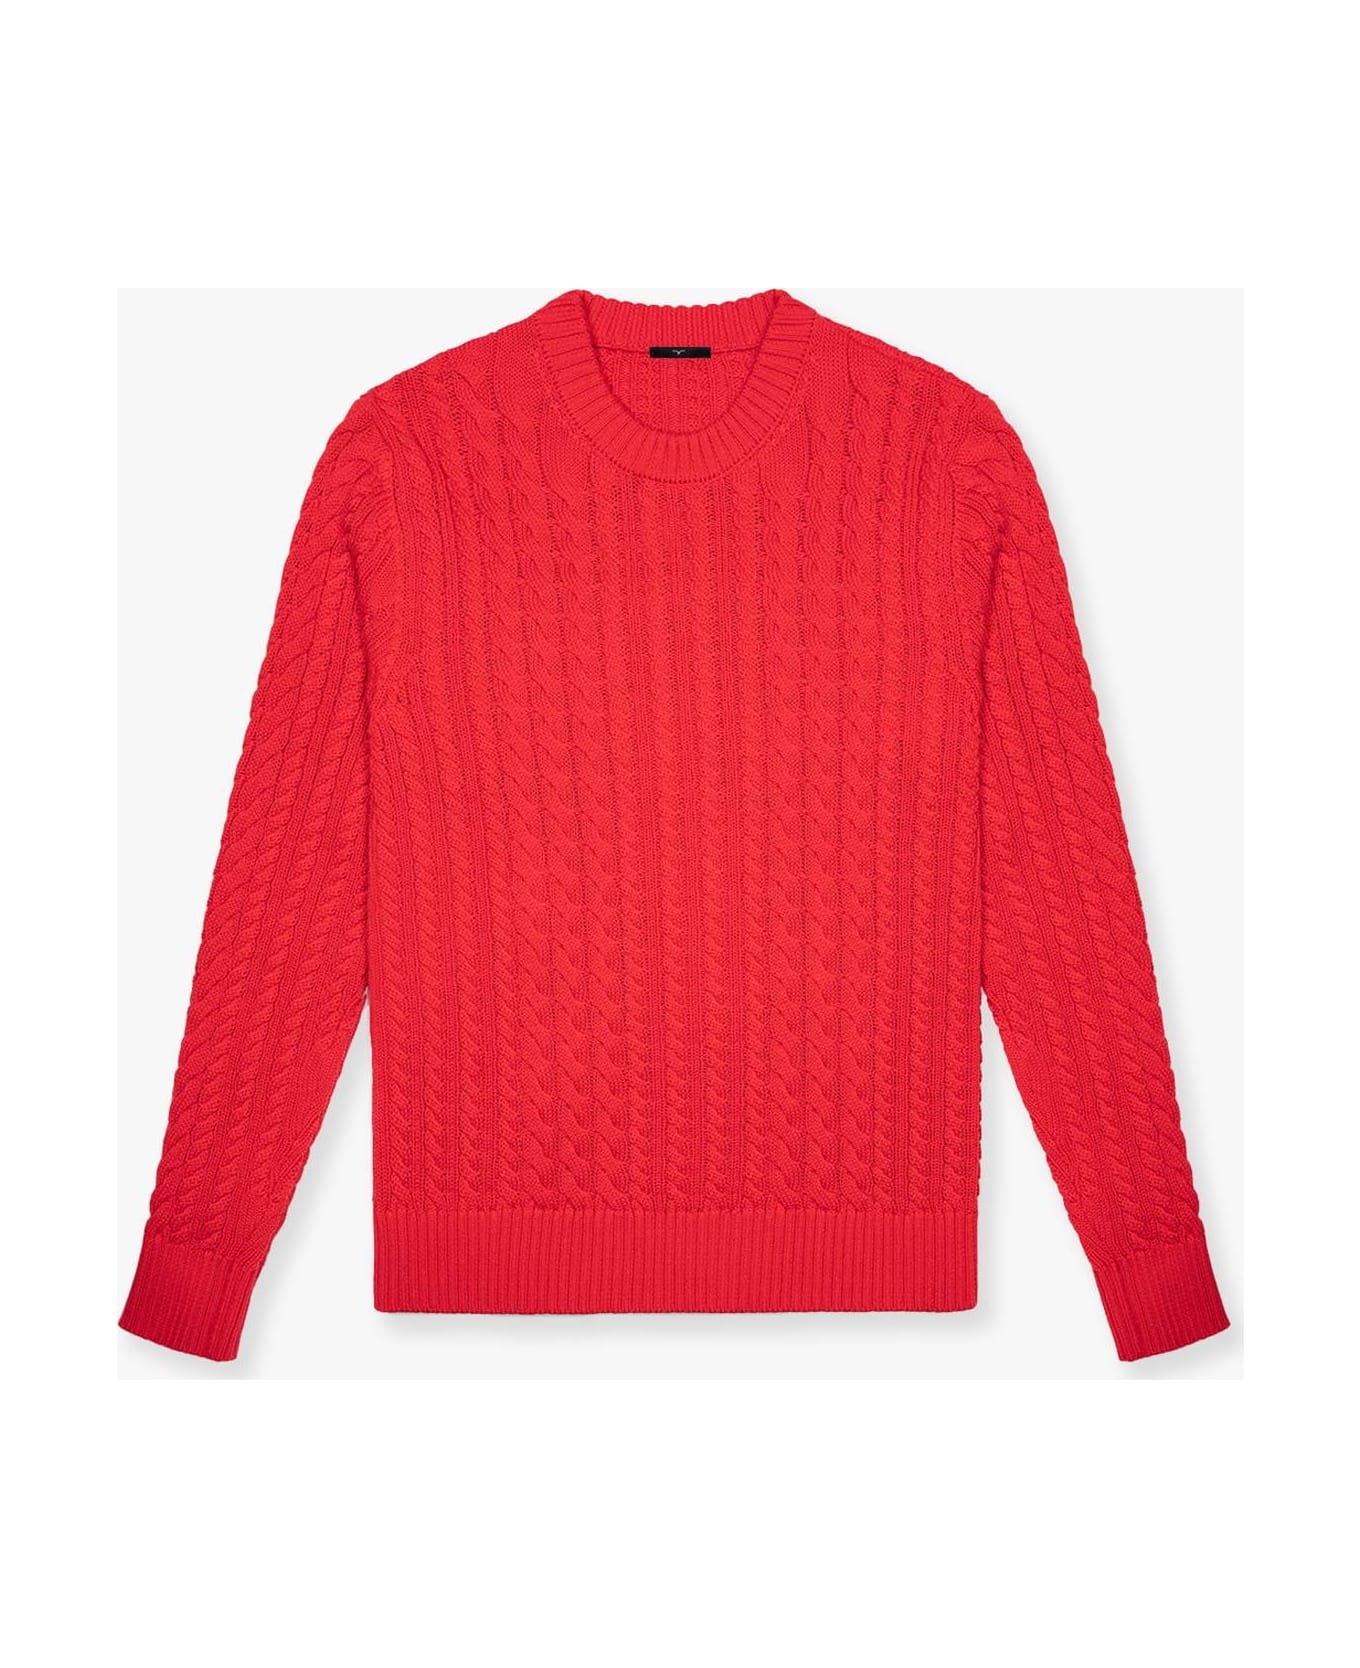 Larusmiani 'brody' Sweater Sweater - Red